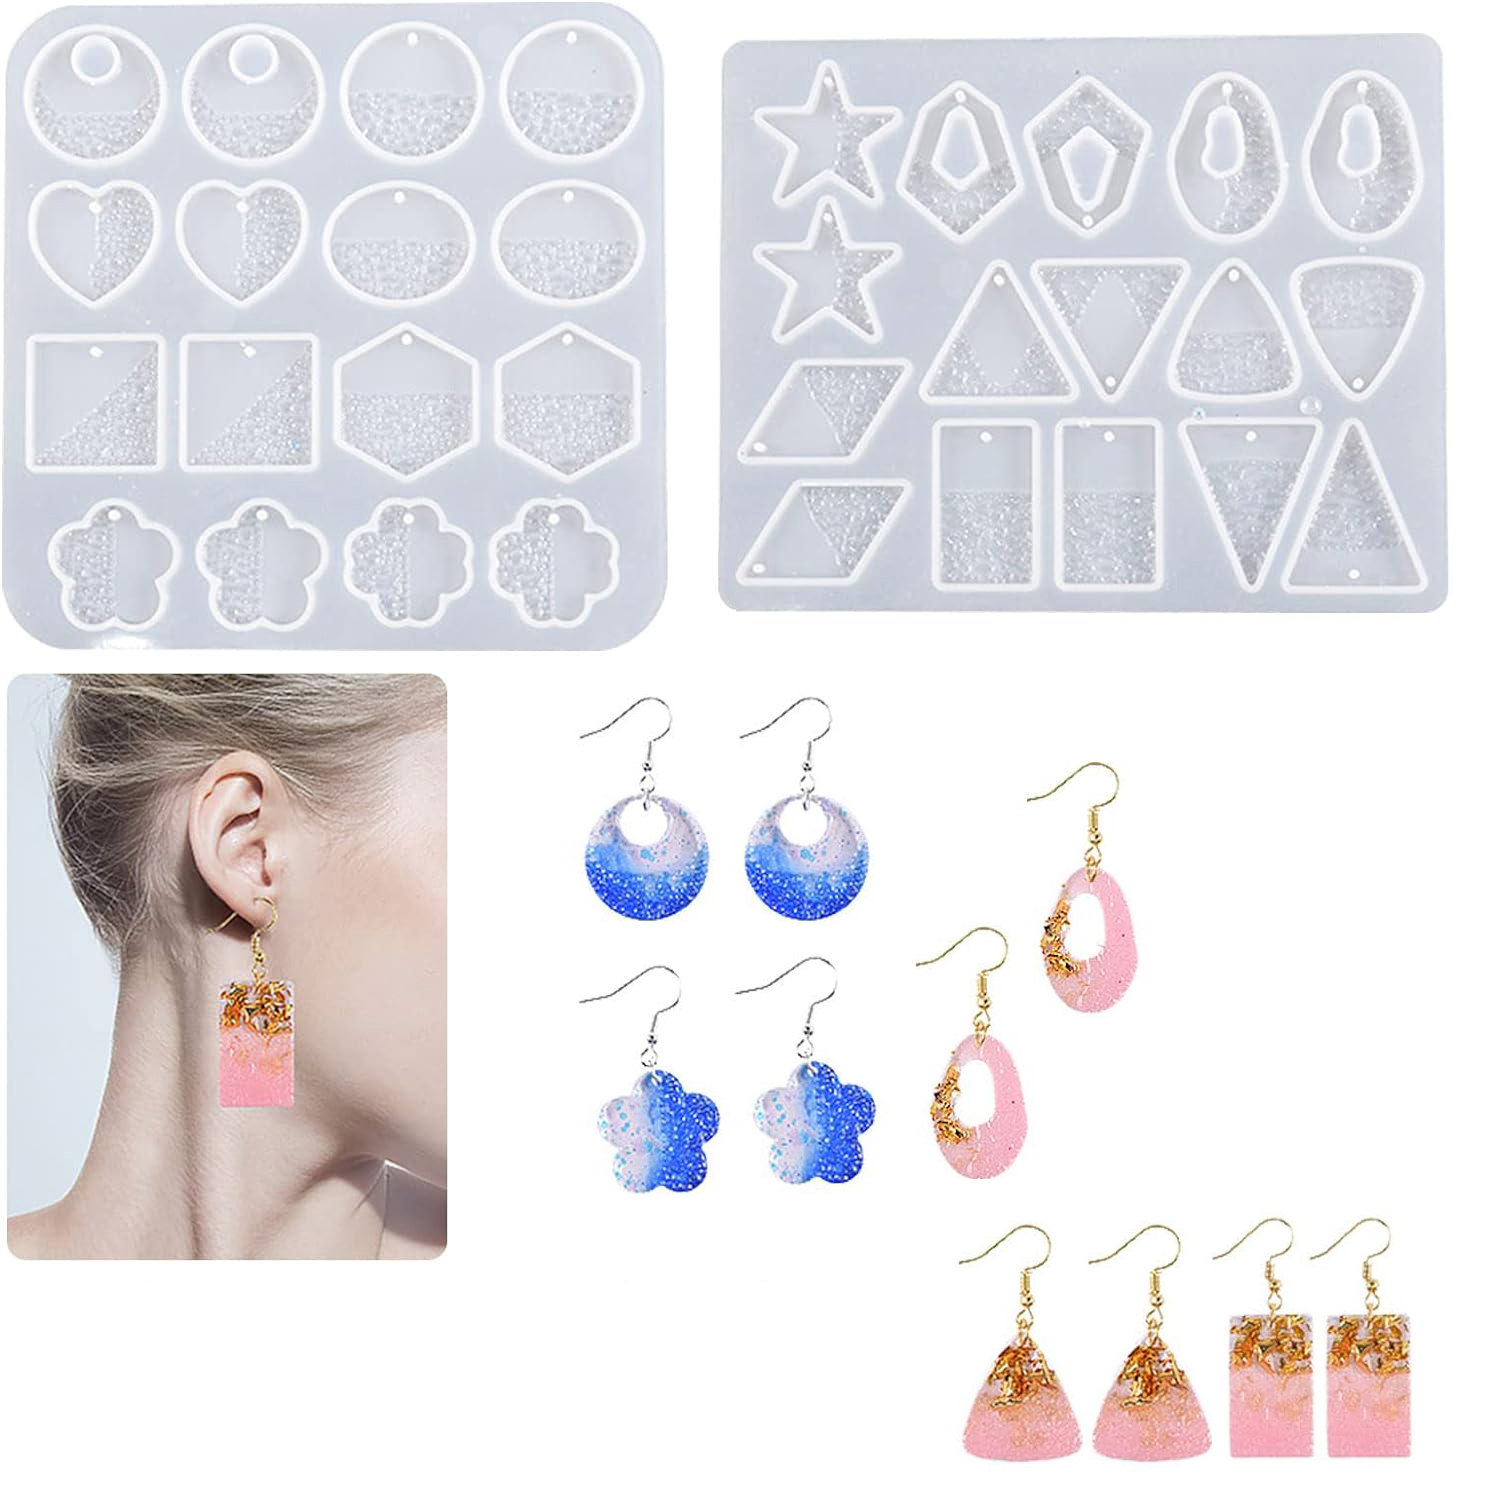 Epoxy Resin Molds Earring Making Kit, Resin Jewelry Mold with Earring Hooks Pendant Molds for DIY Resin Craft Beginners Kit